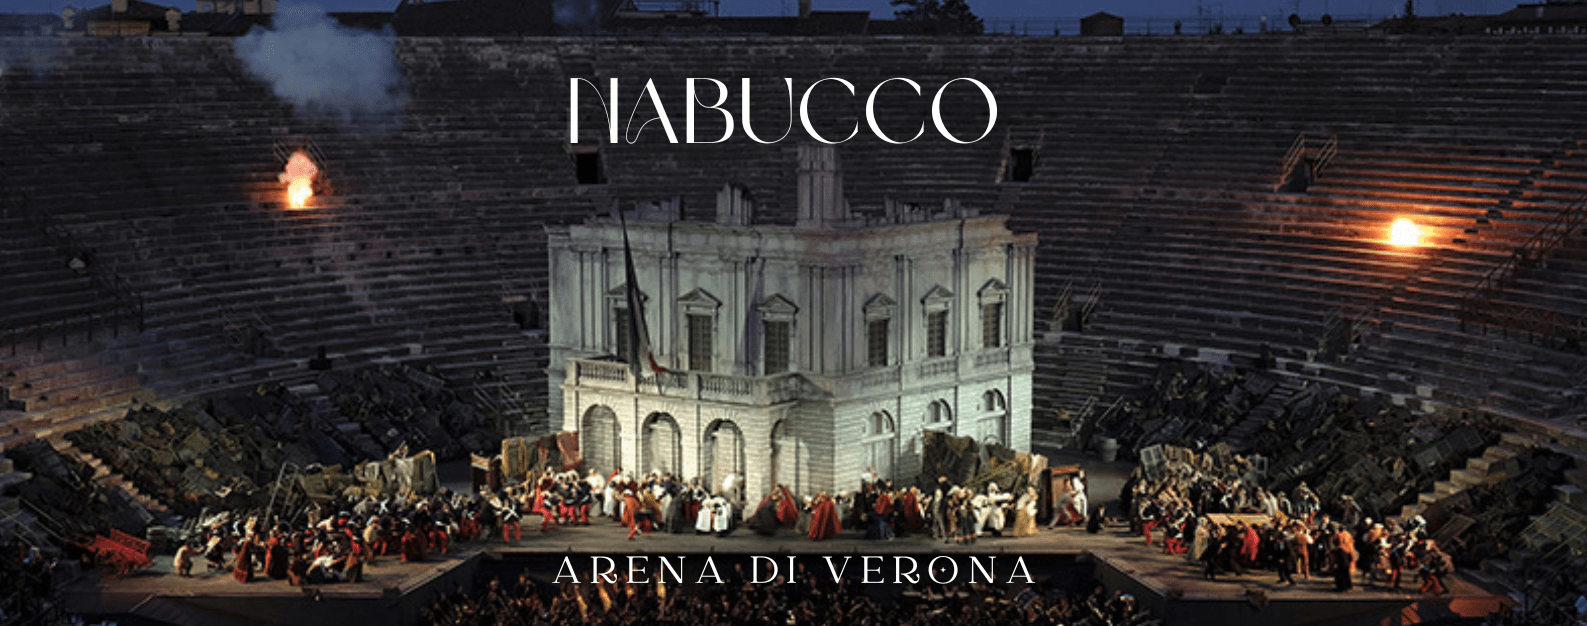 nabucco-opera-arena-di-verona-tickets